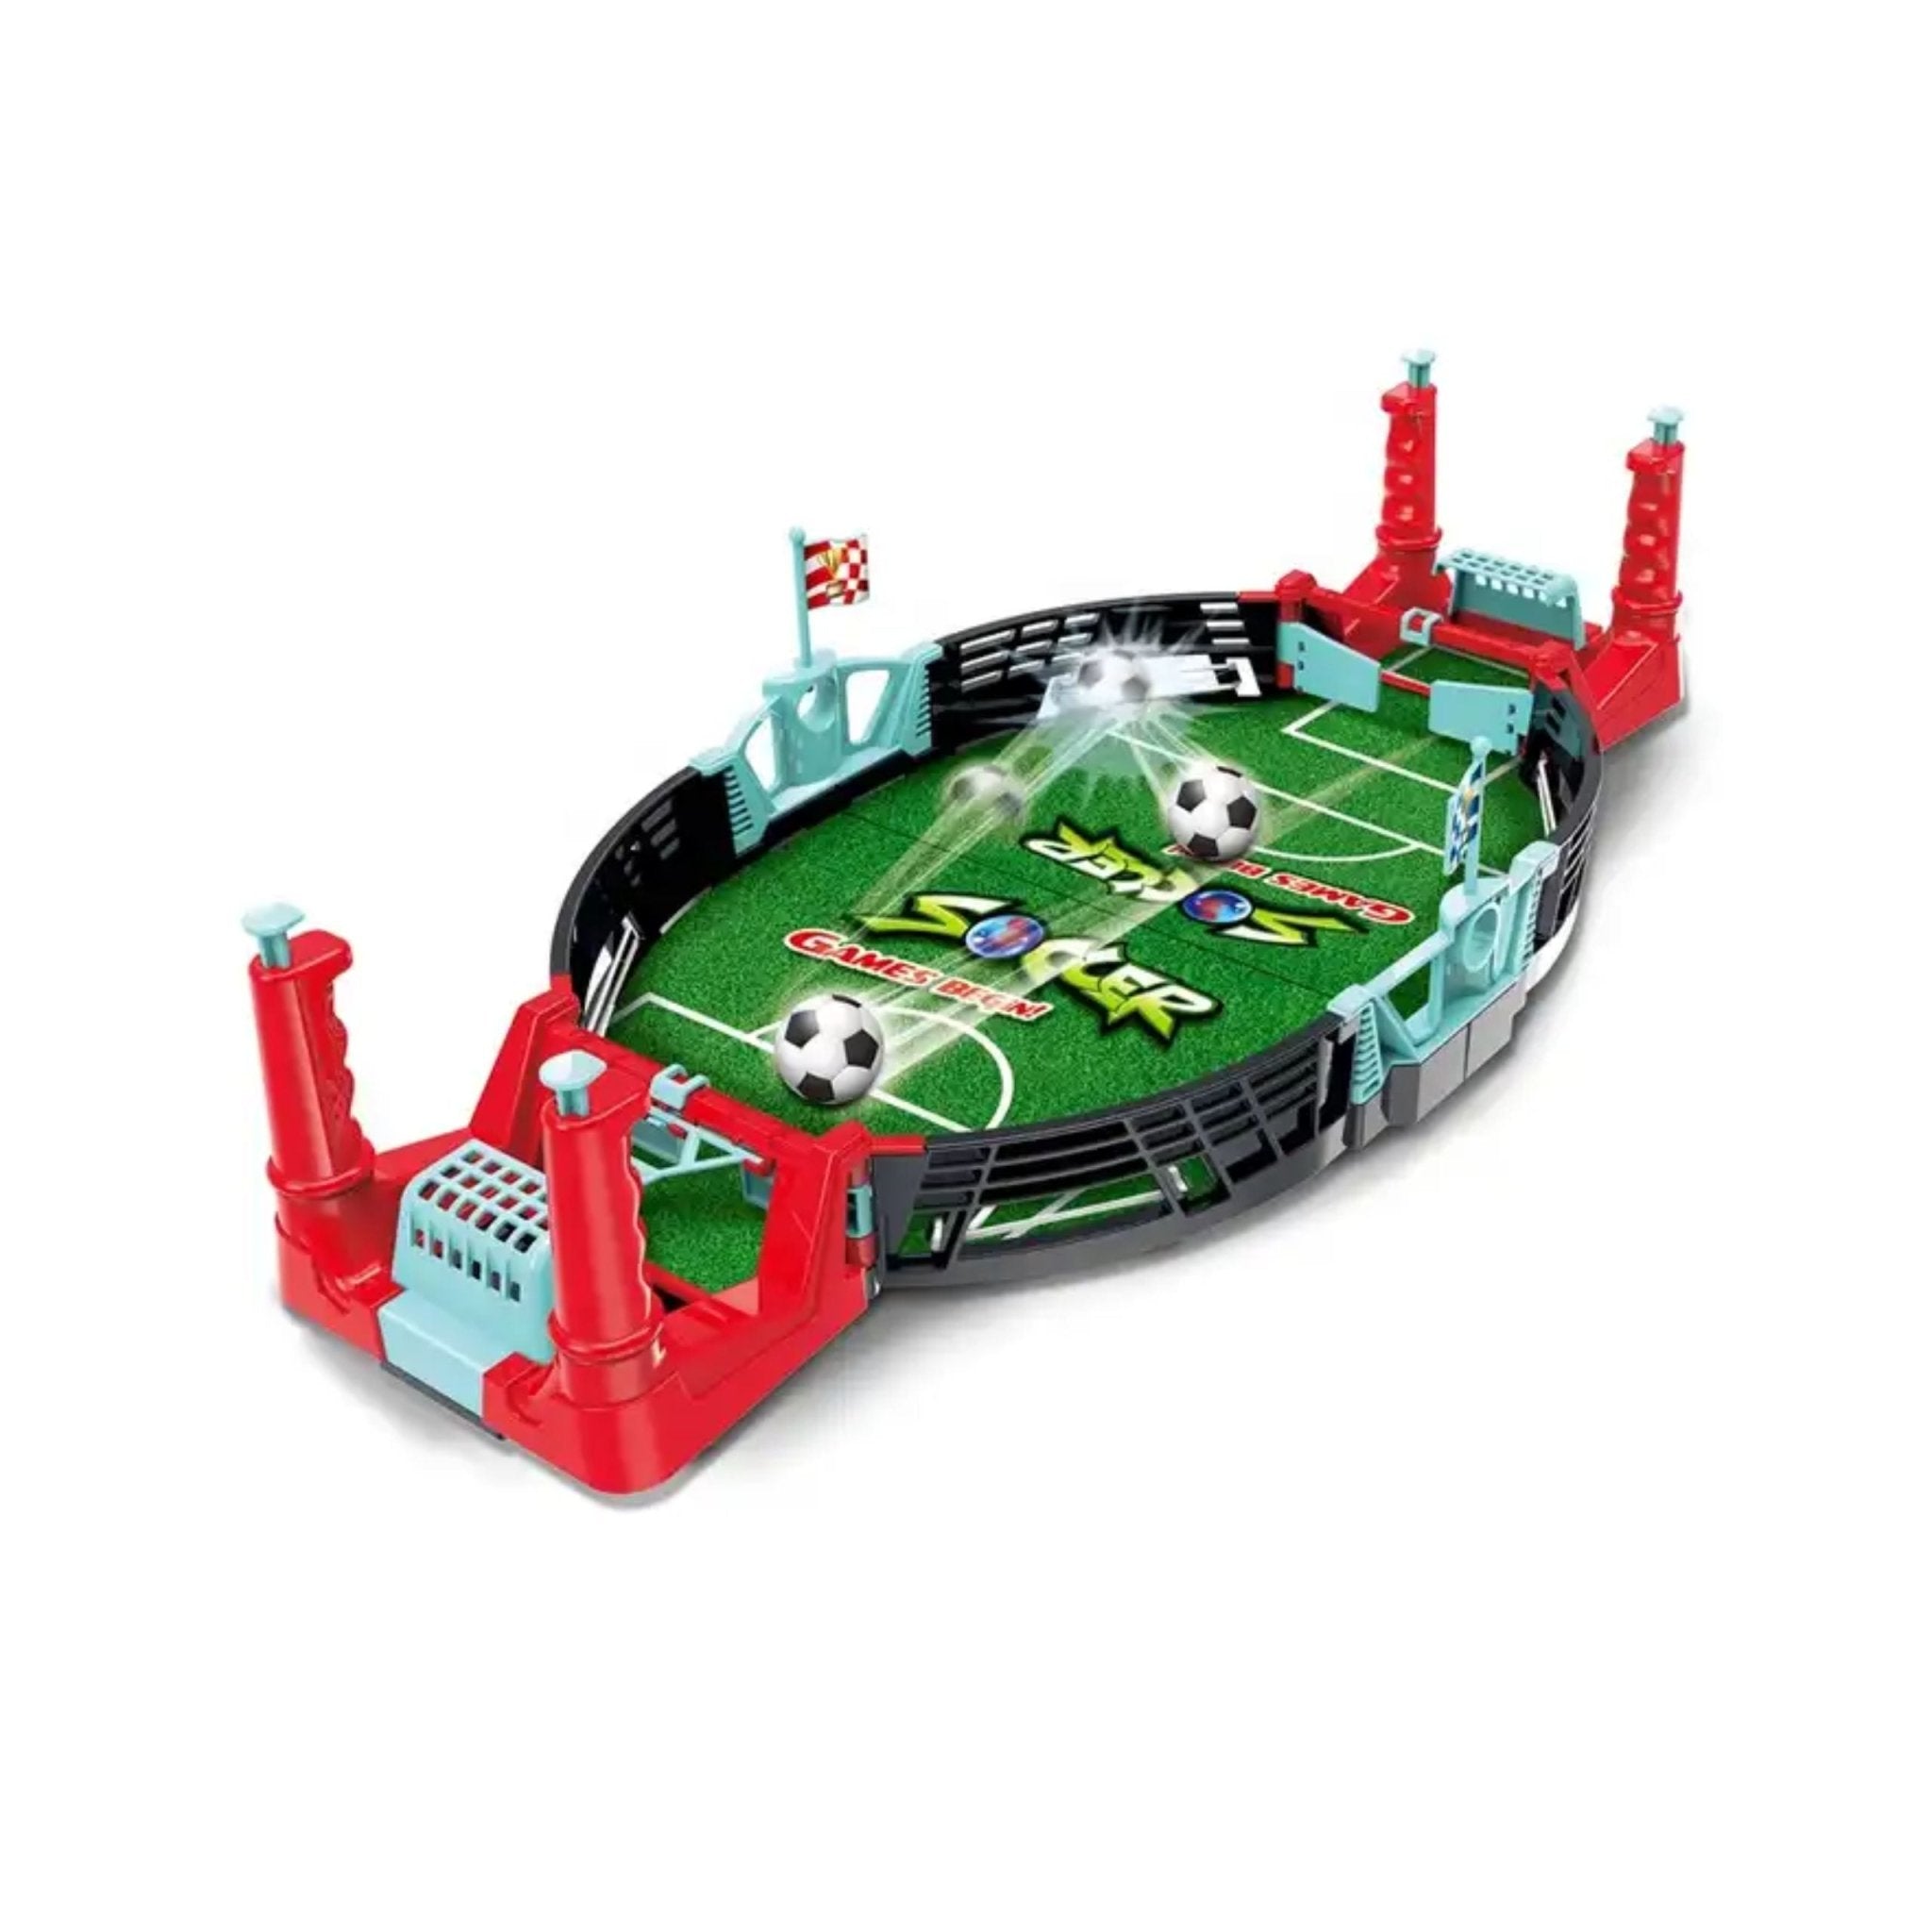 Table Football Game Set for Kids - 2